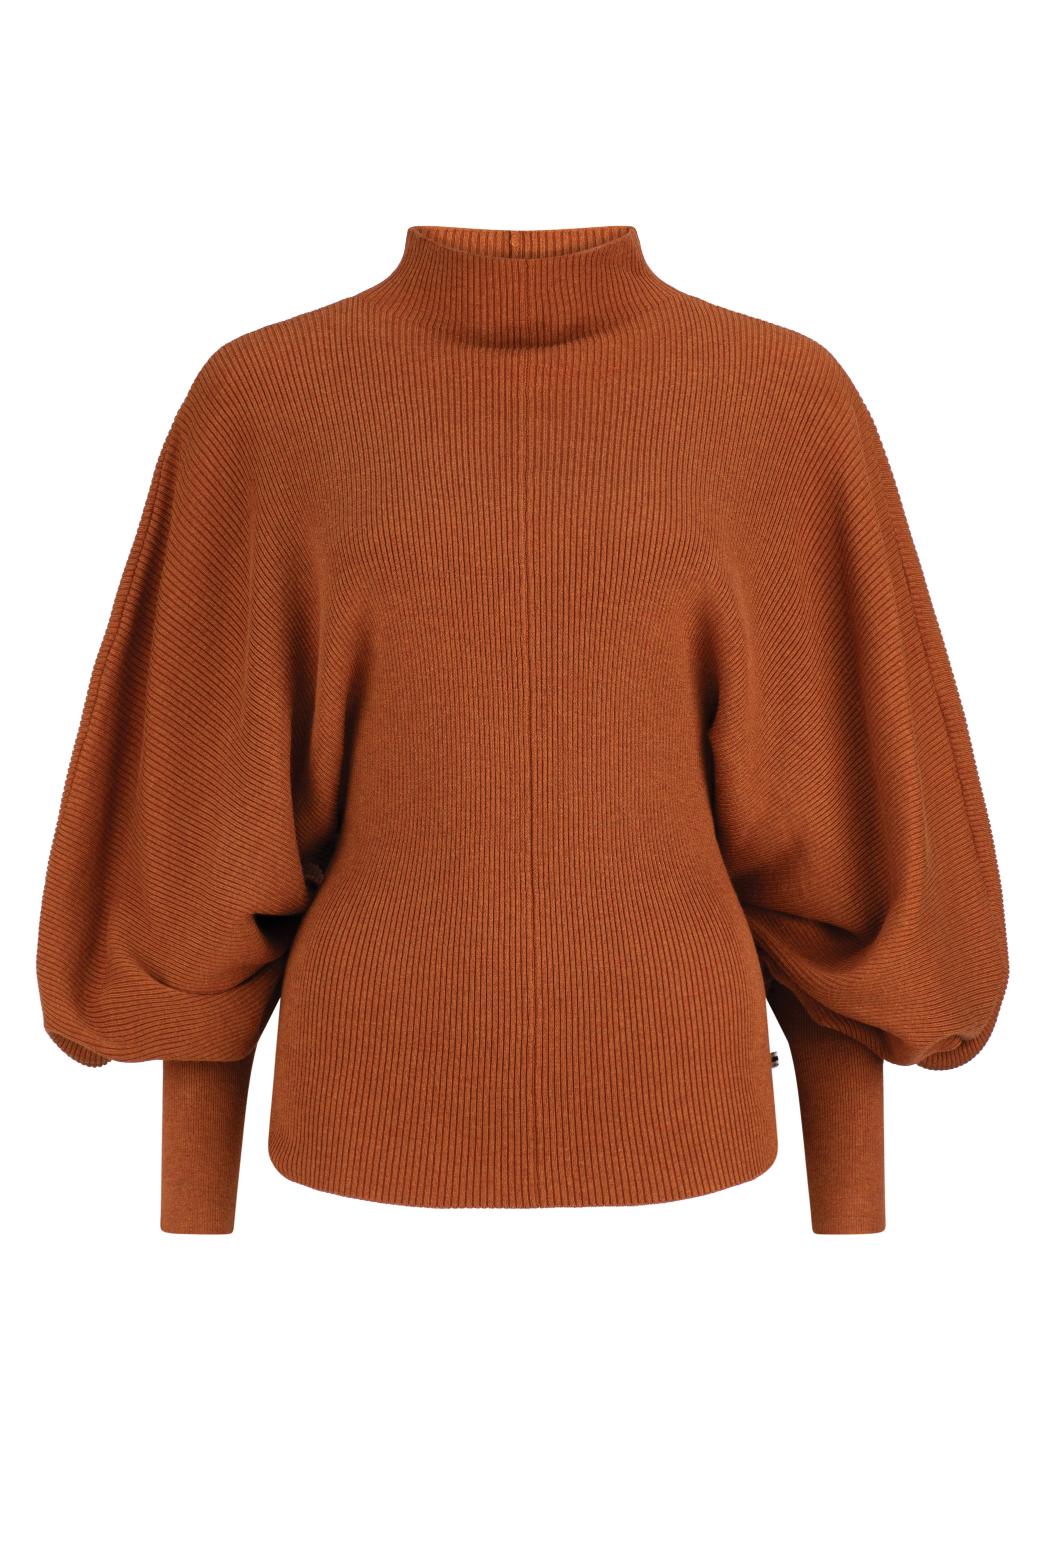 Elm Sweater